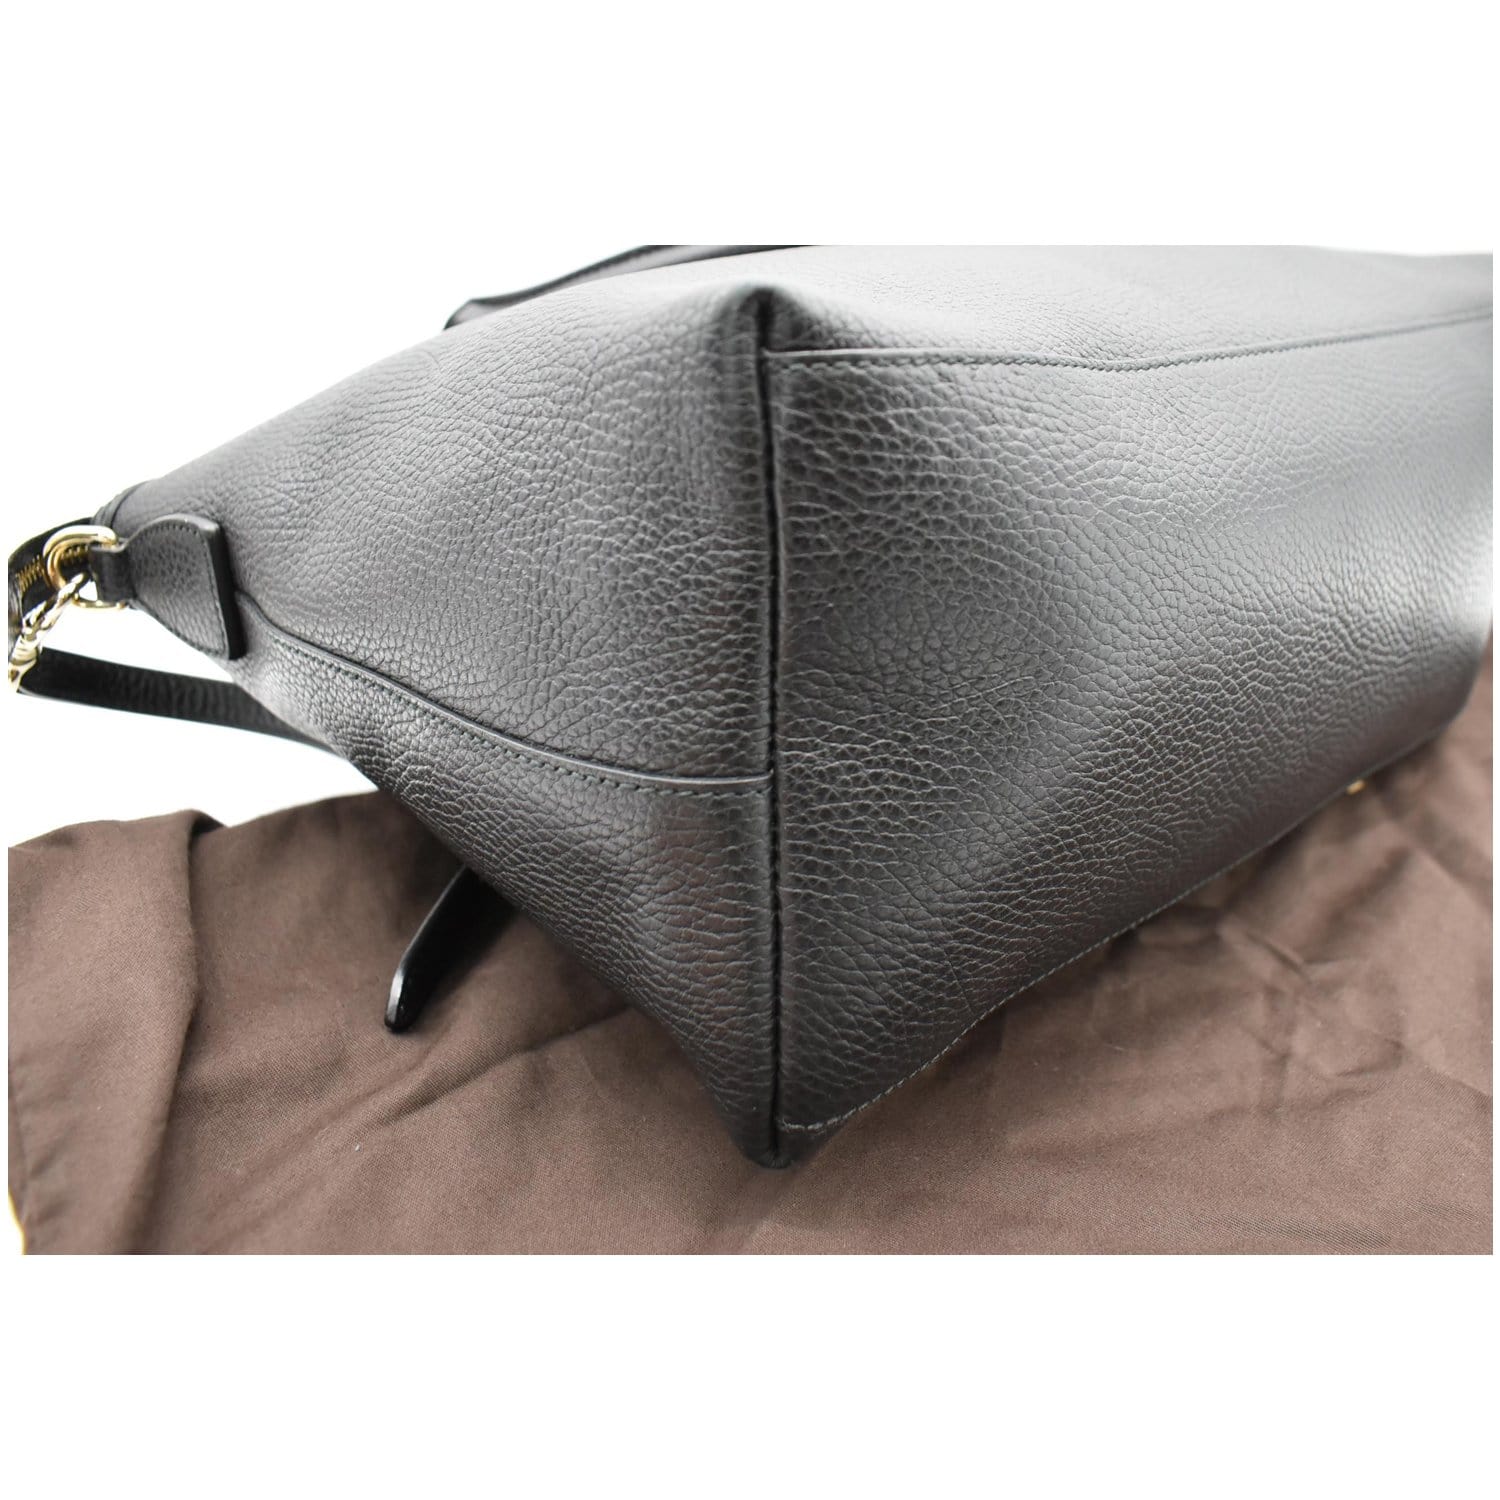 Tote Bags for Women Fashion Designer Dome Handbag Leather Satchel